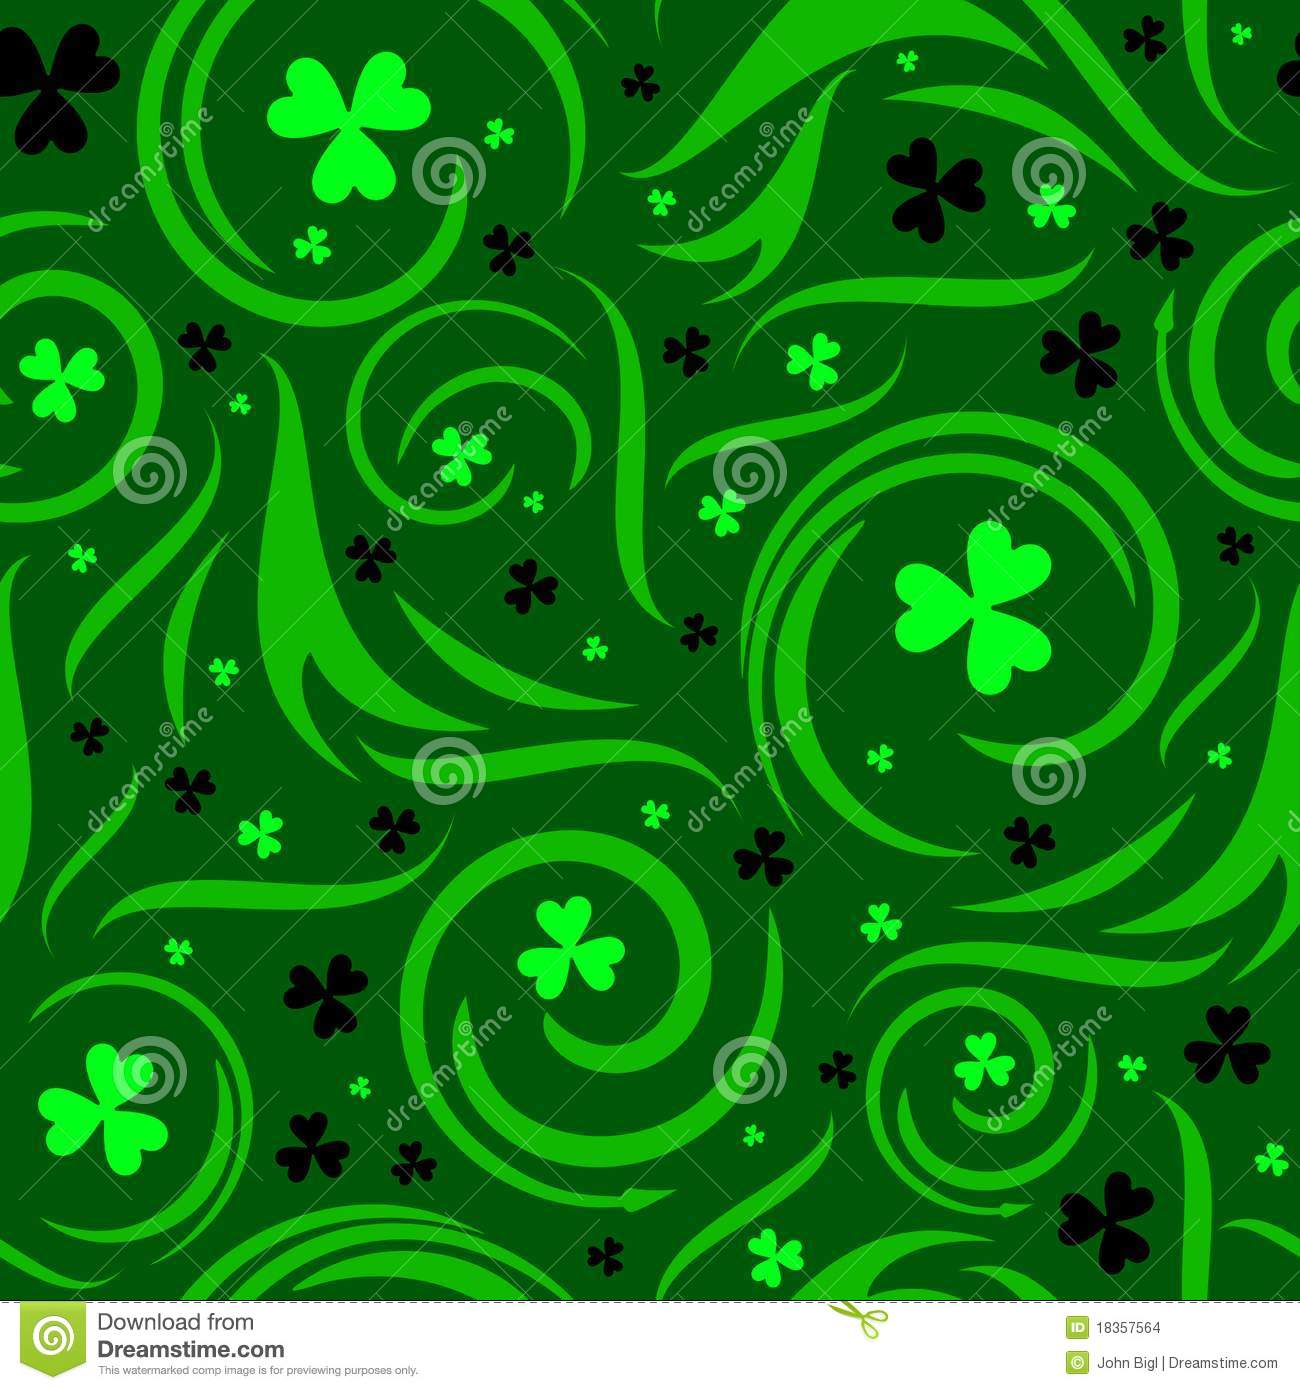 Irish Shamrock Wallpaper HD Seamless